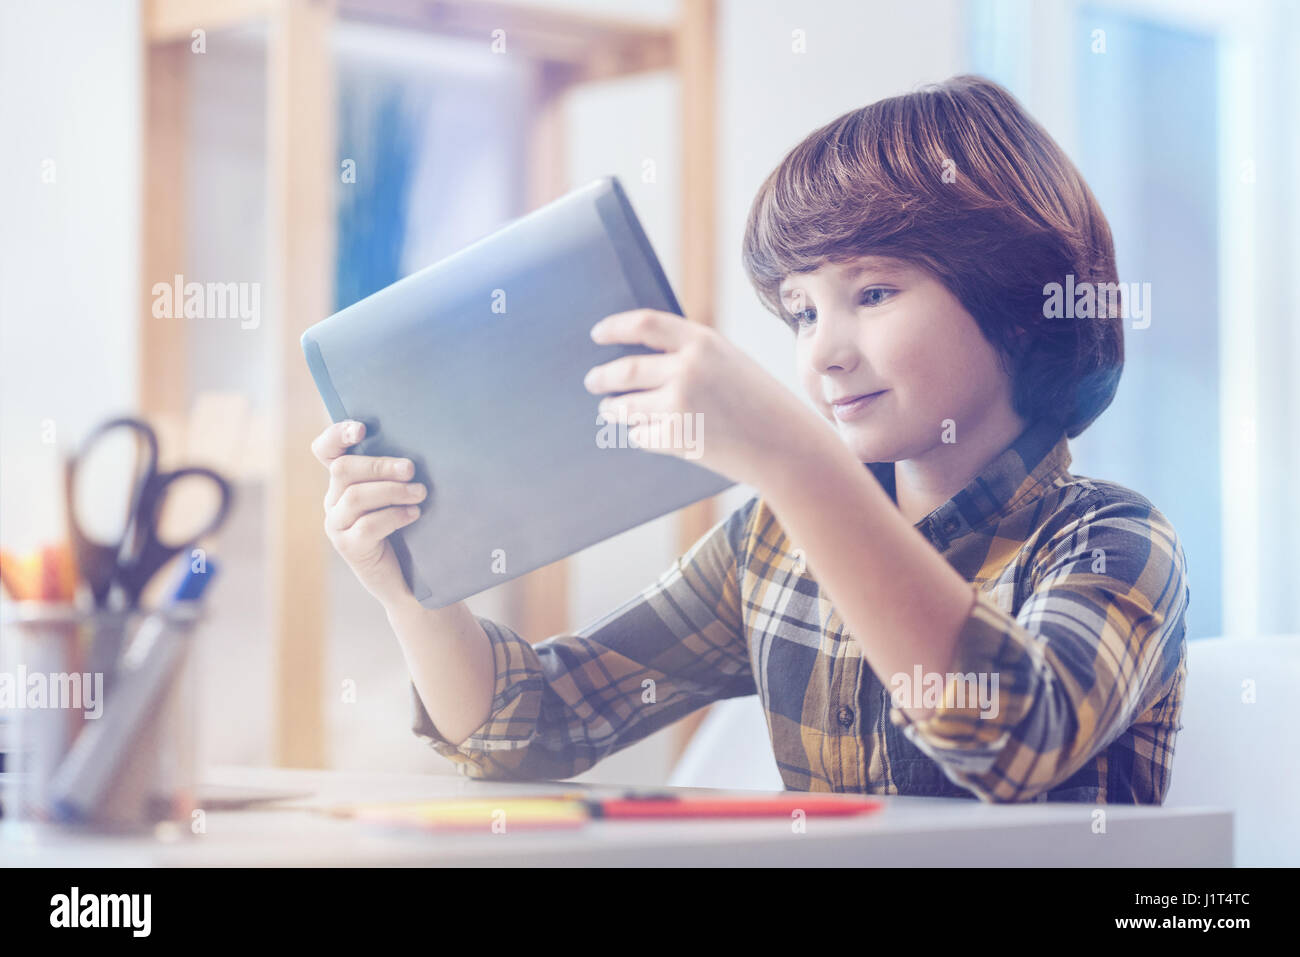 Süsser Boy in kariertes Hemd Blick auf digital-Tablette Stockfoto